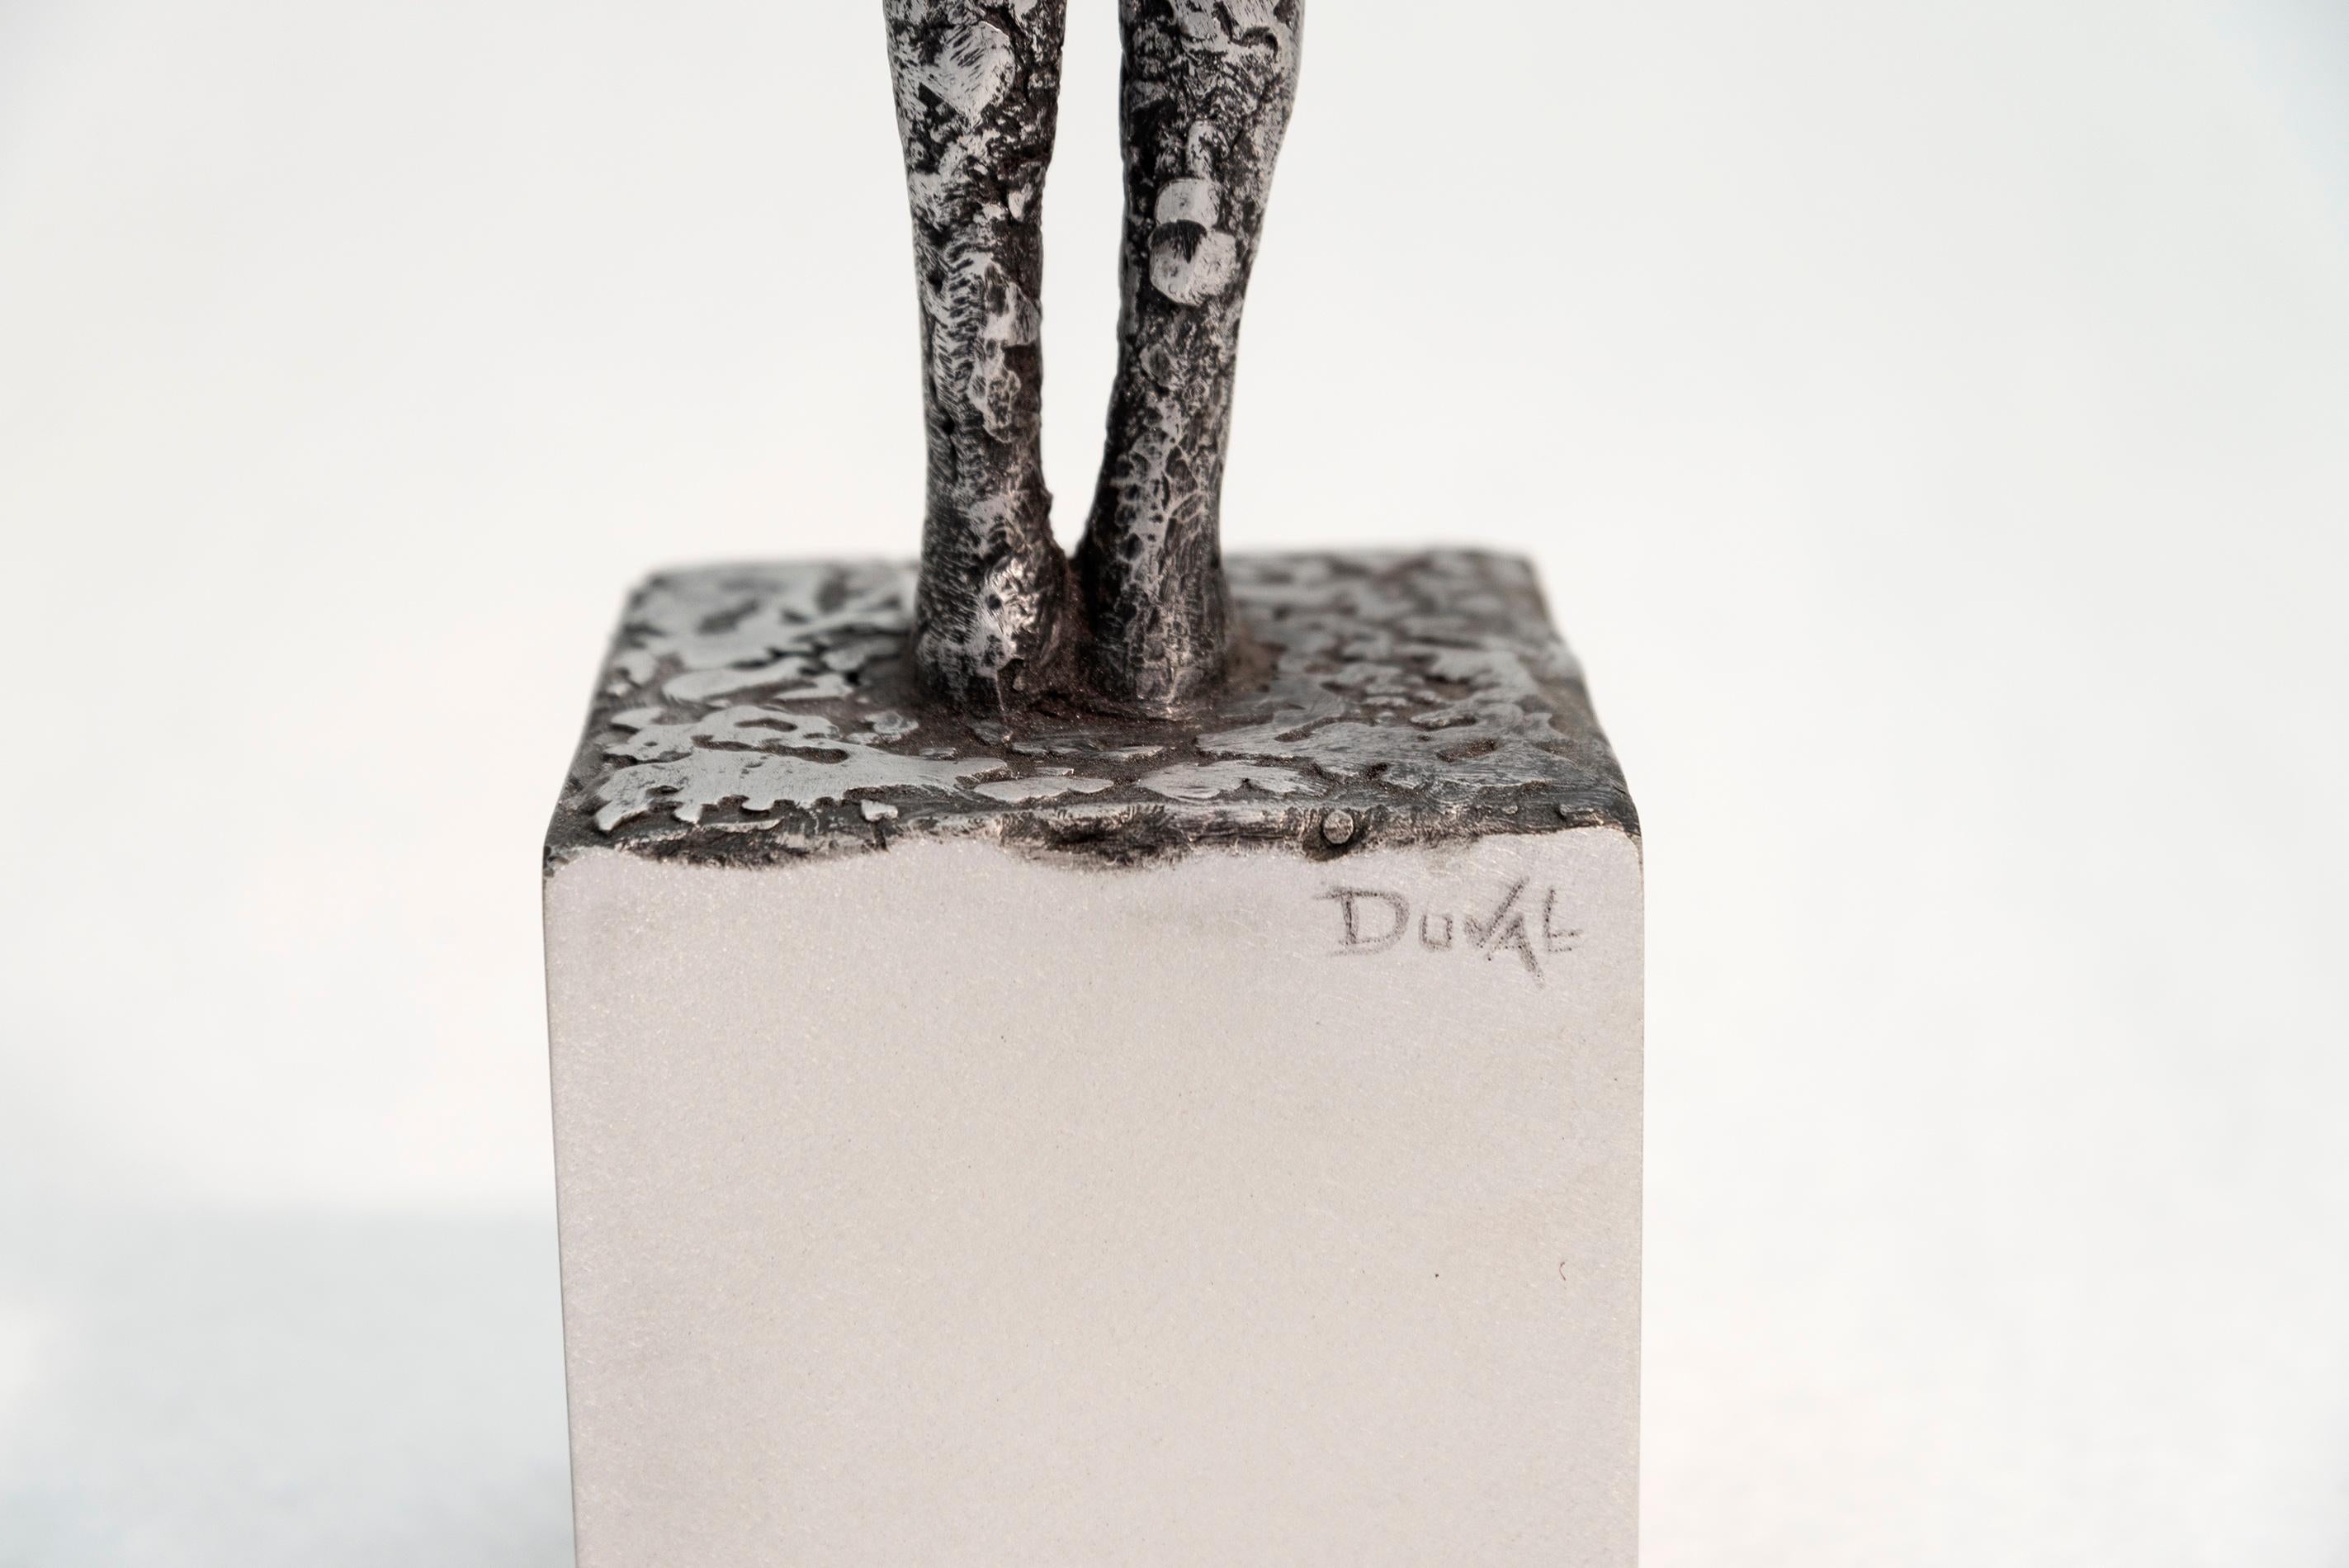 Alexis - expressive, textured, male, figurative, cast aluminum sculpture - Contemporary Sculpture by Paul Duval